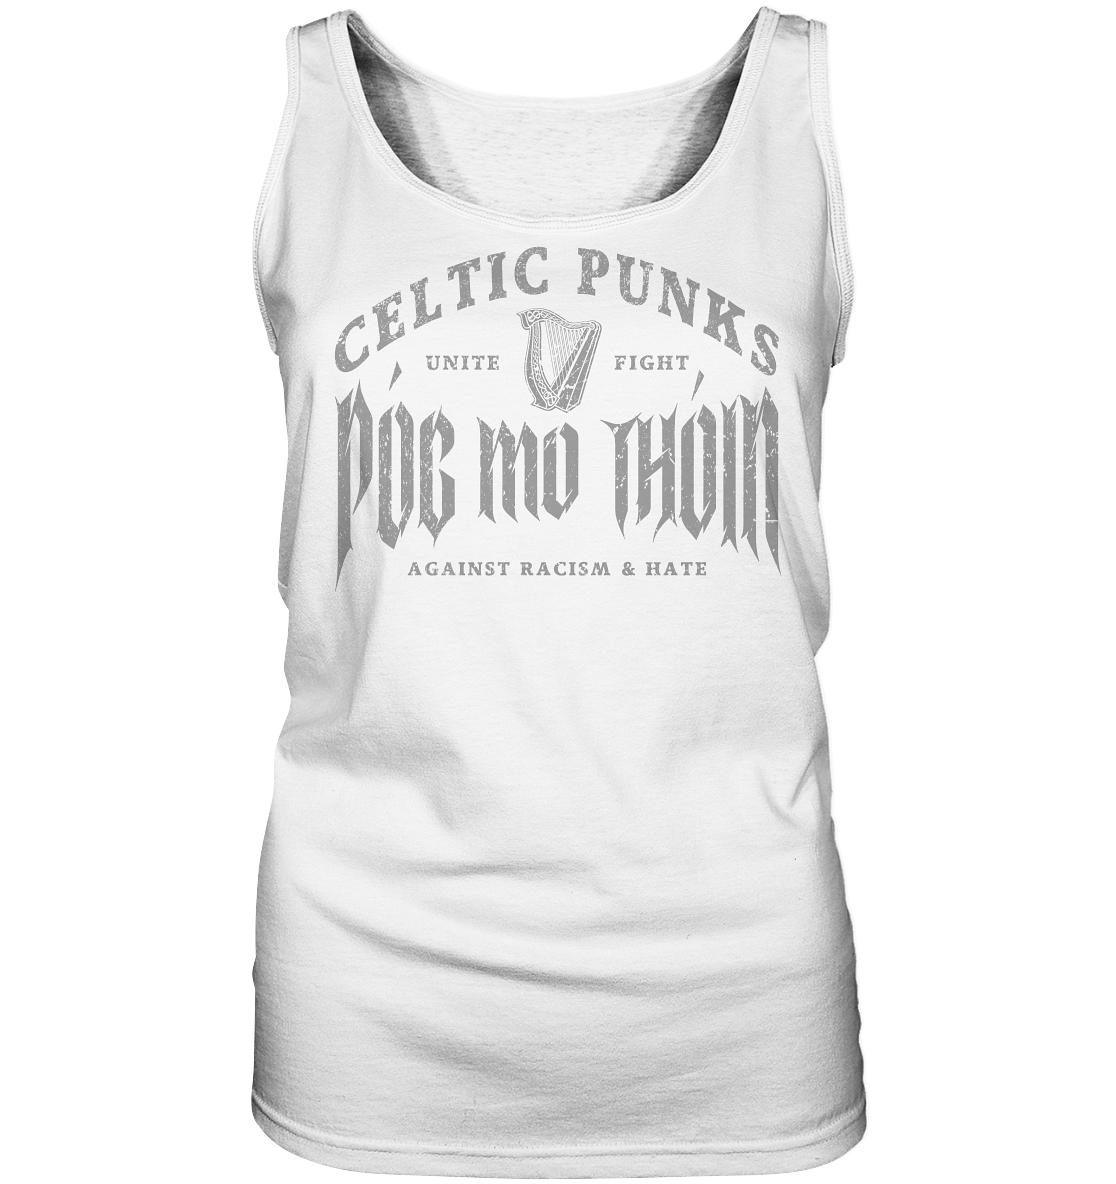 Póg Mo Thóin Streetwear "Celtic Punks Against Racism & Hate / Unite & Fight" - Ladies Tank-Top